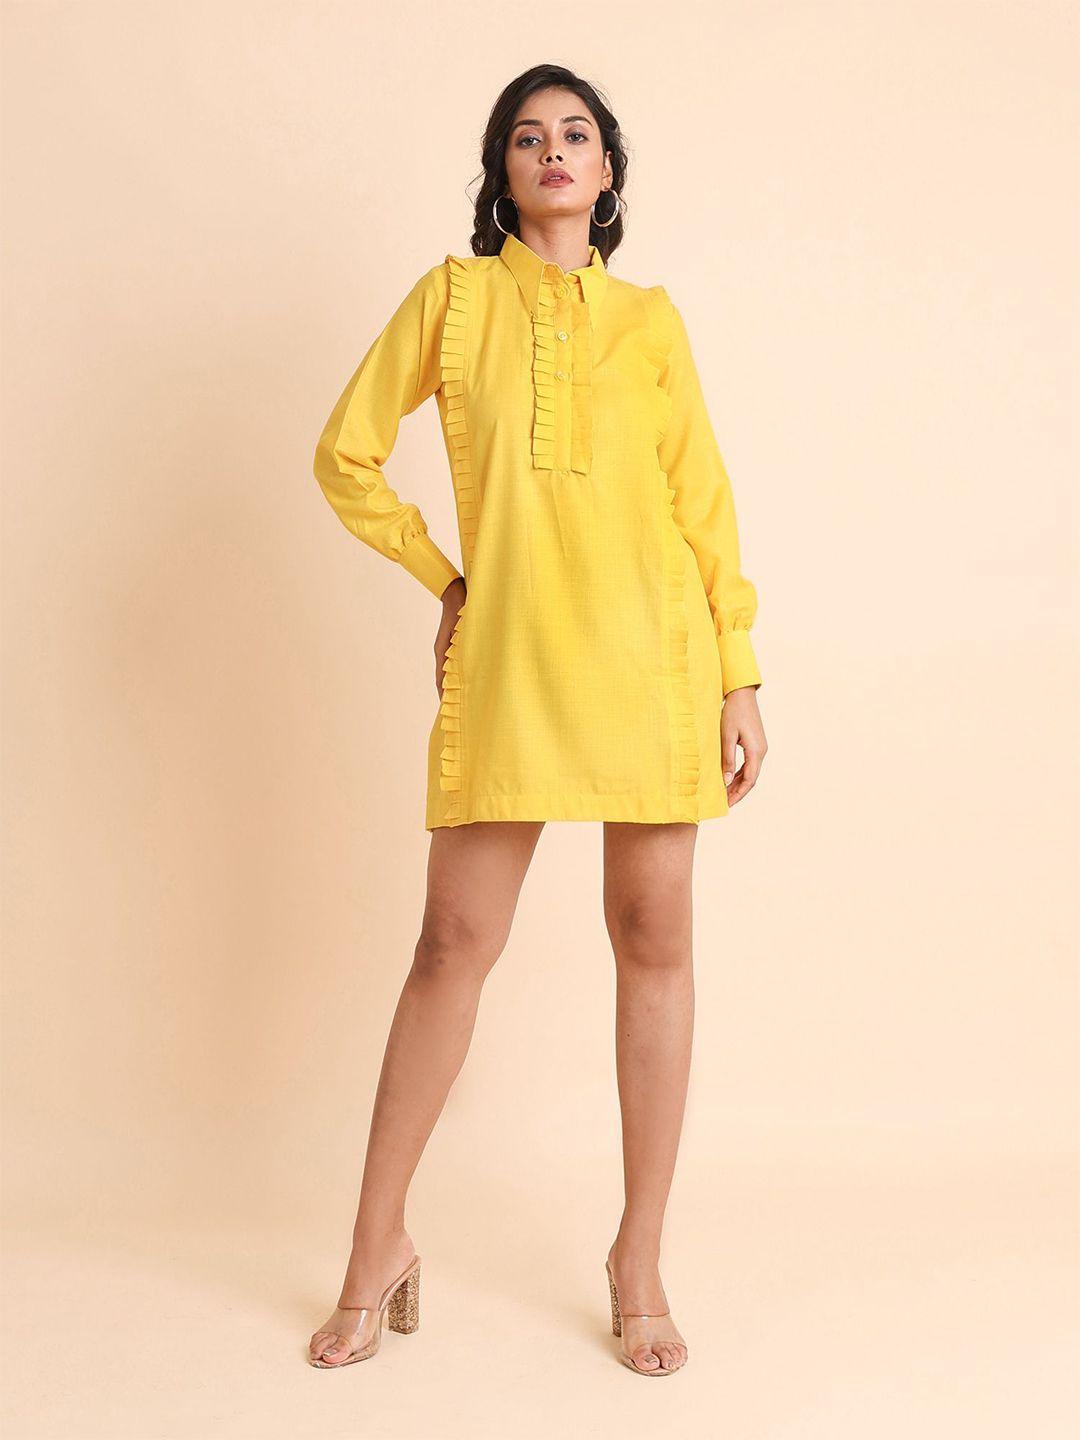 disli yellow a-line dress